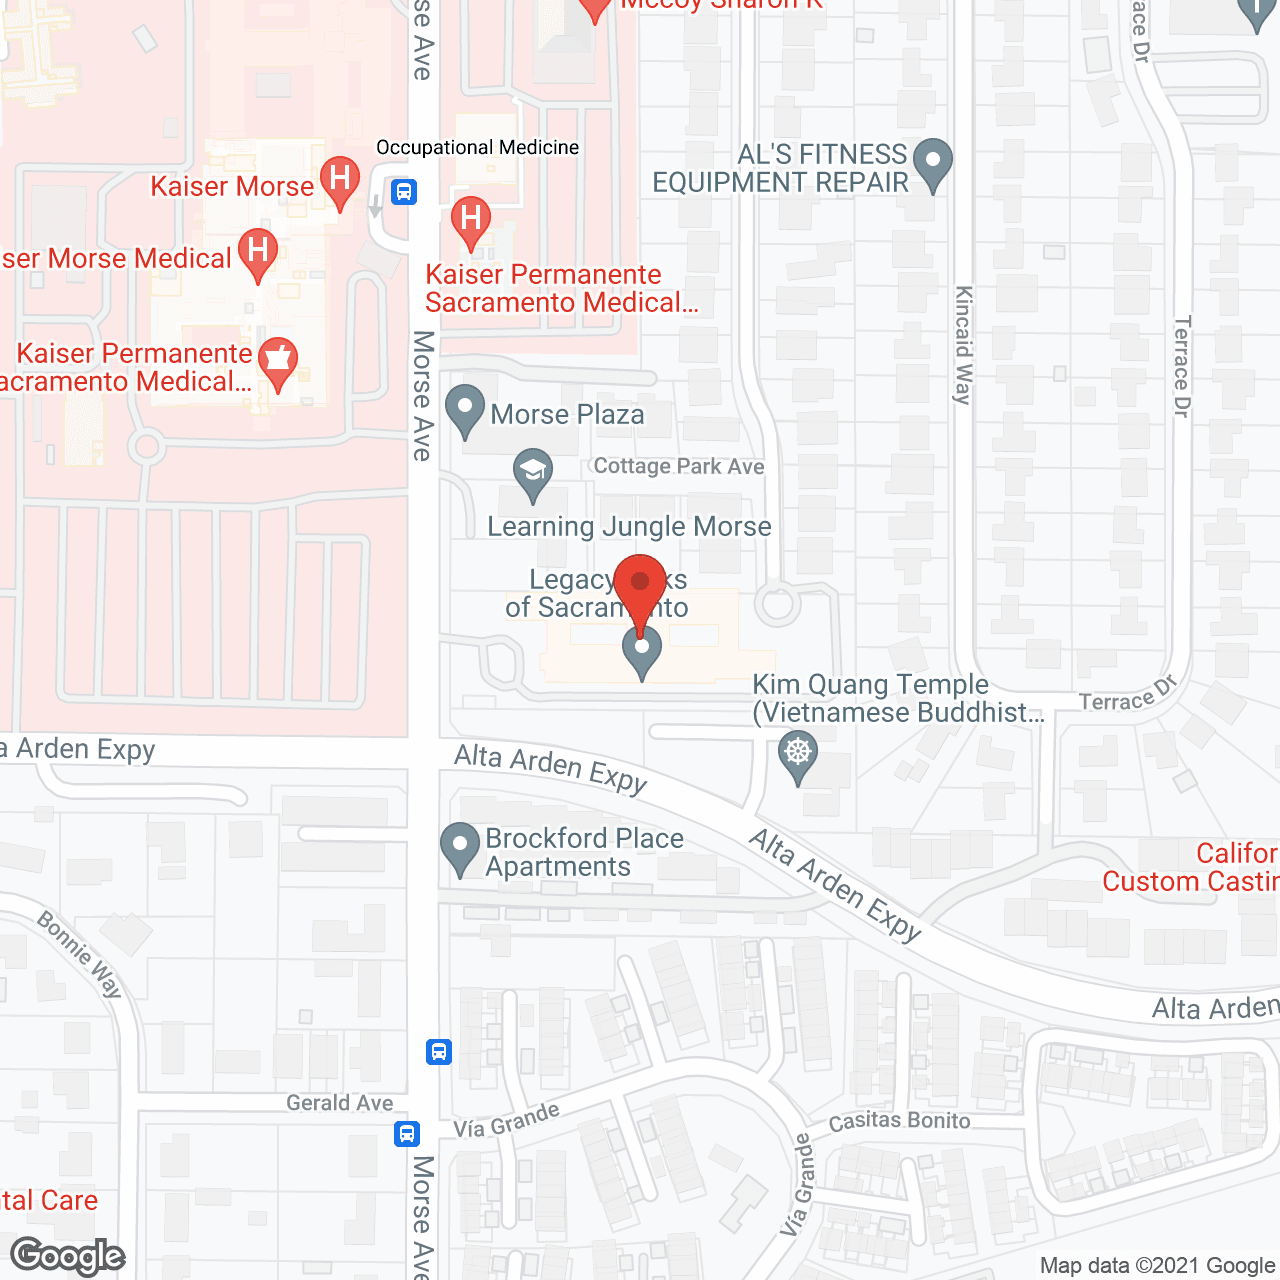 Legacy Oaks of Sacramento in google map